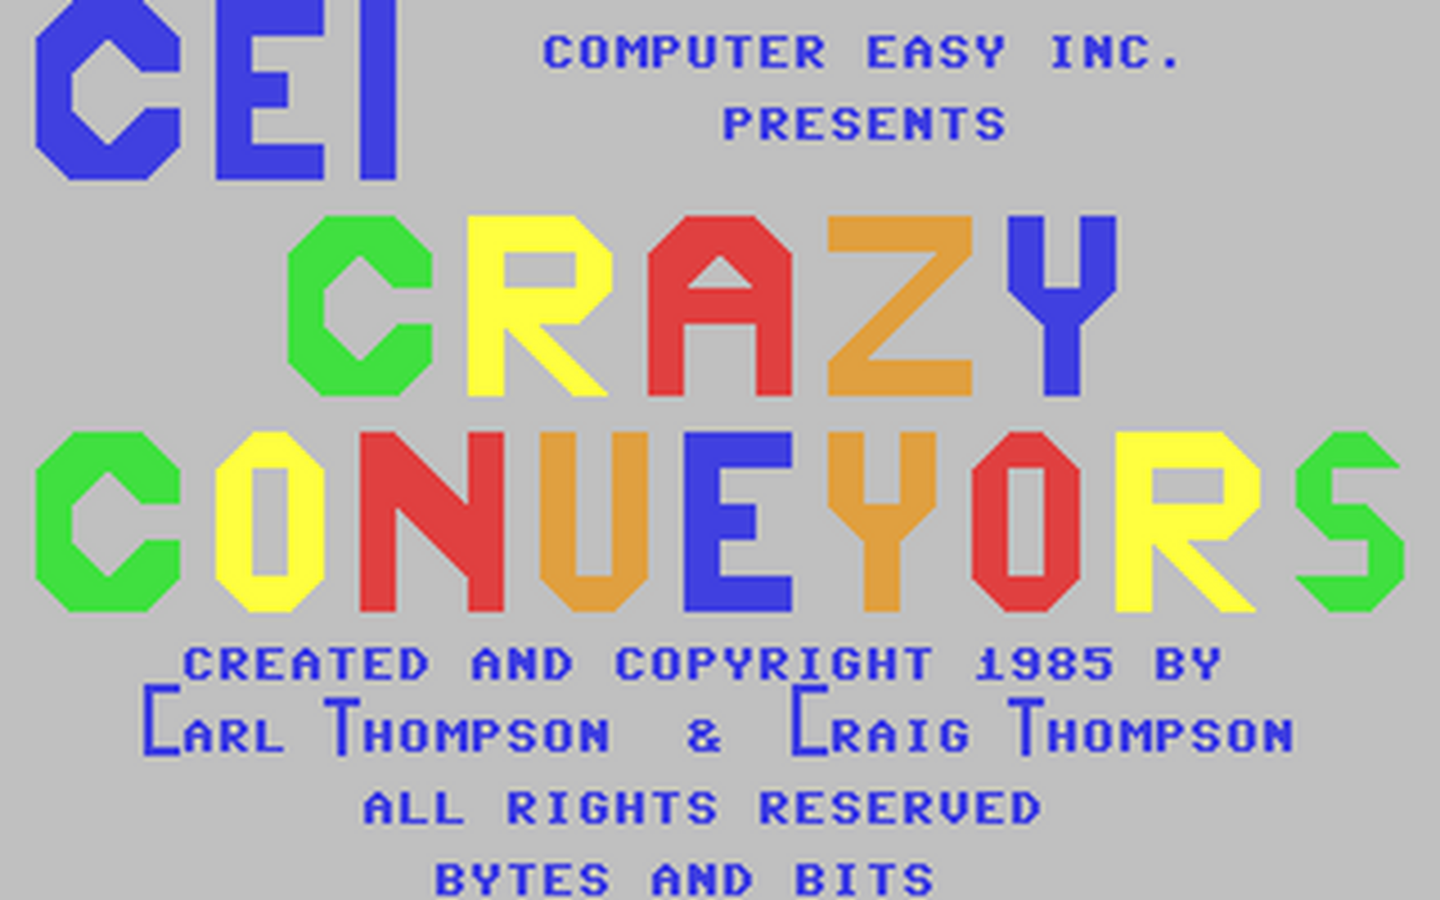 C64 GameBase Crazy_Conveyors Bytes_and_Bits 1985